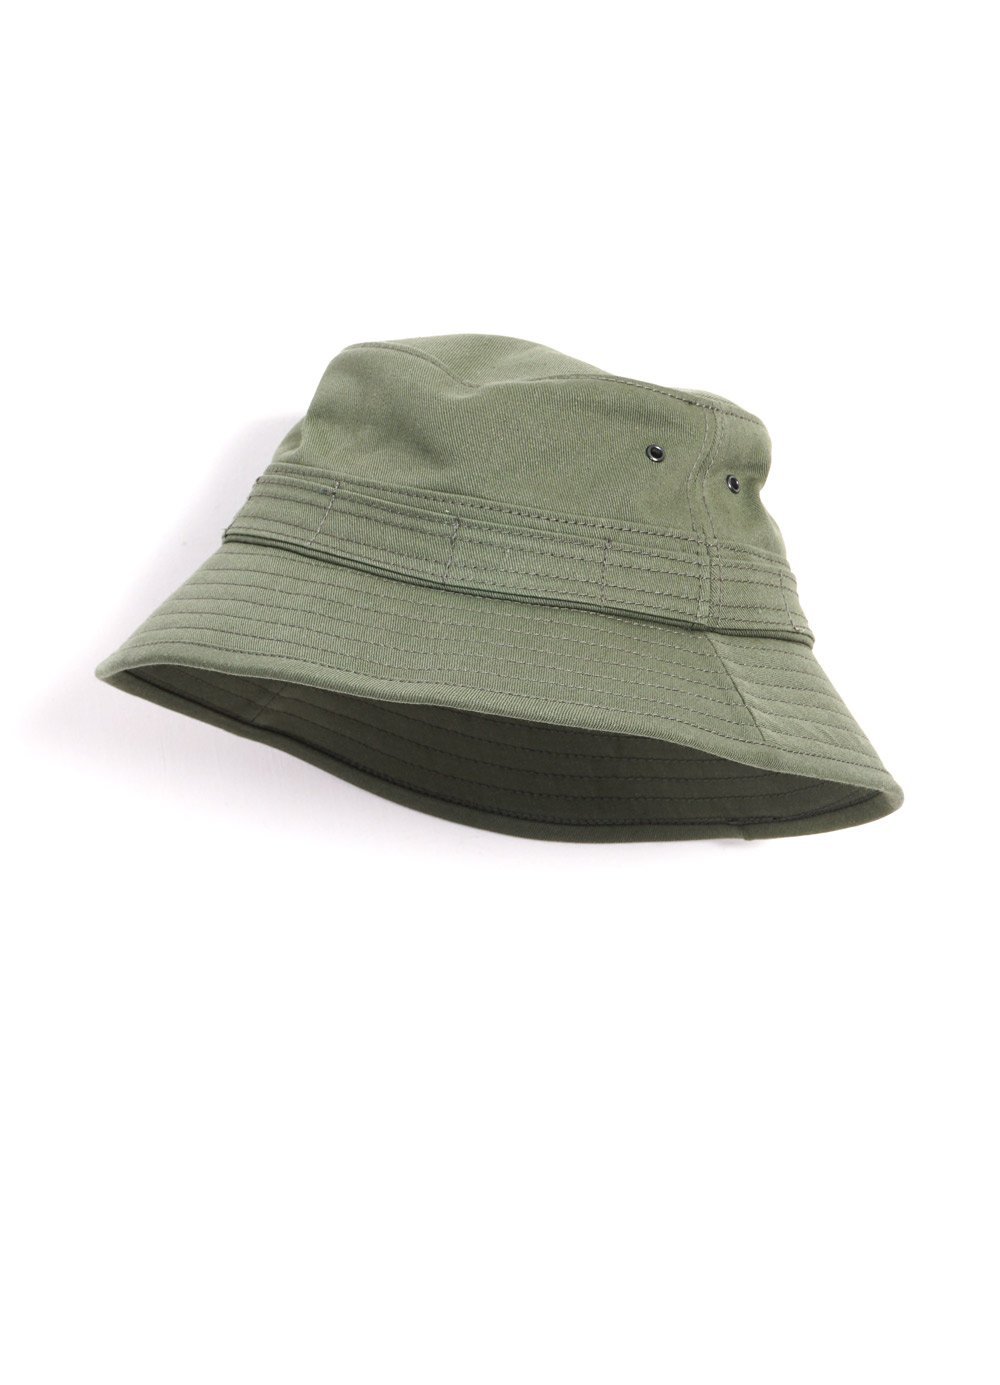 HANSEN GARMENTS - EDVARD | Bucket Hat | Green - HANSEN Garments